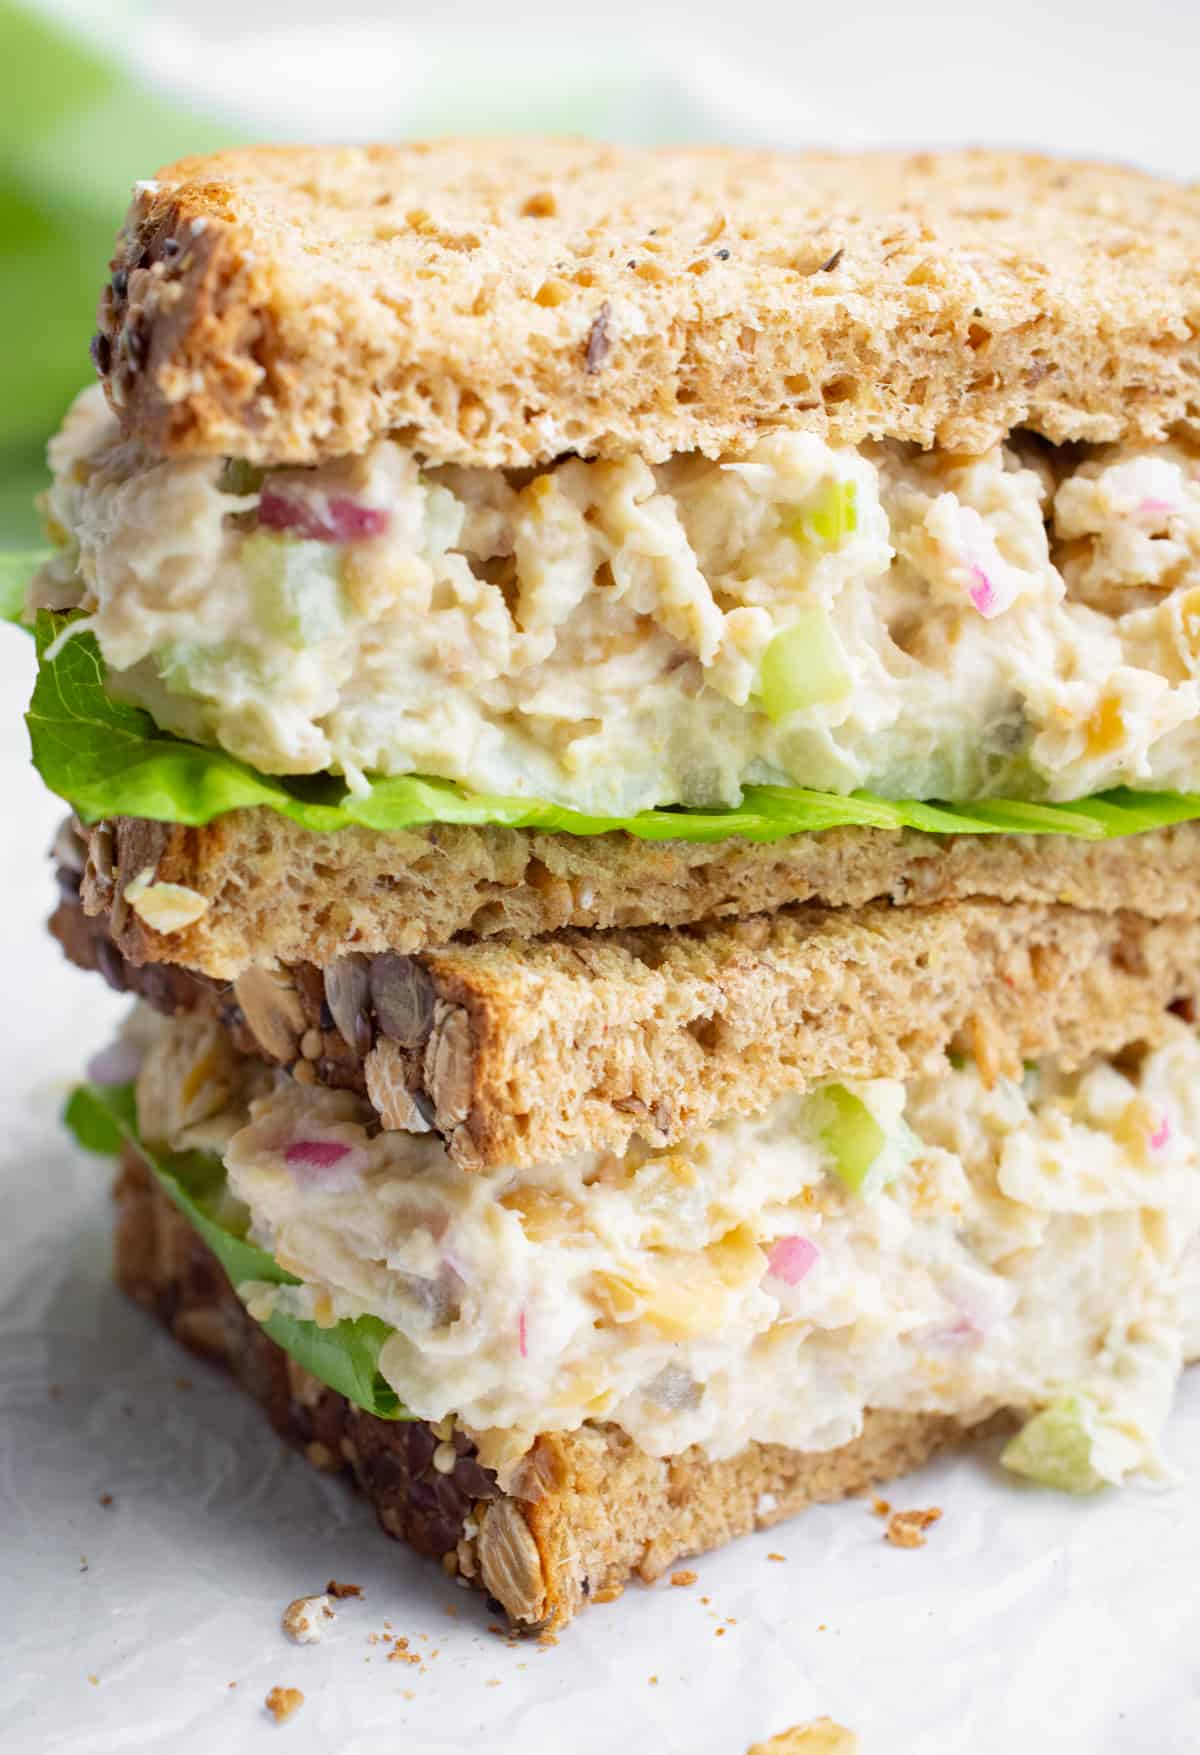 Vegan tuna salad sandwich cut in half and stacked.